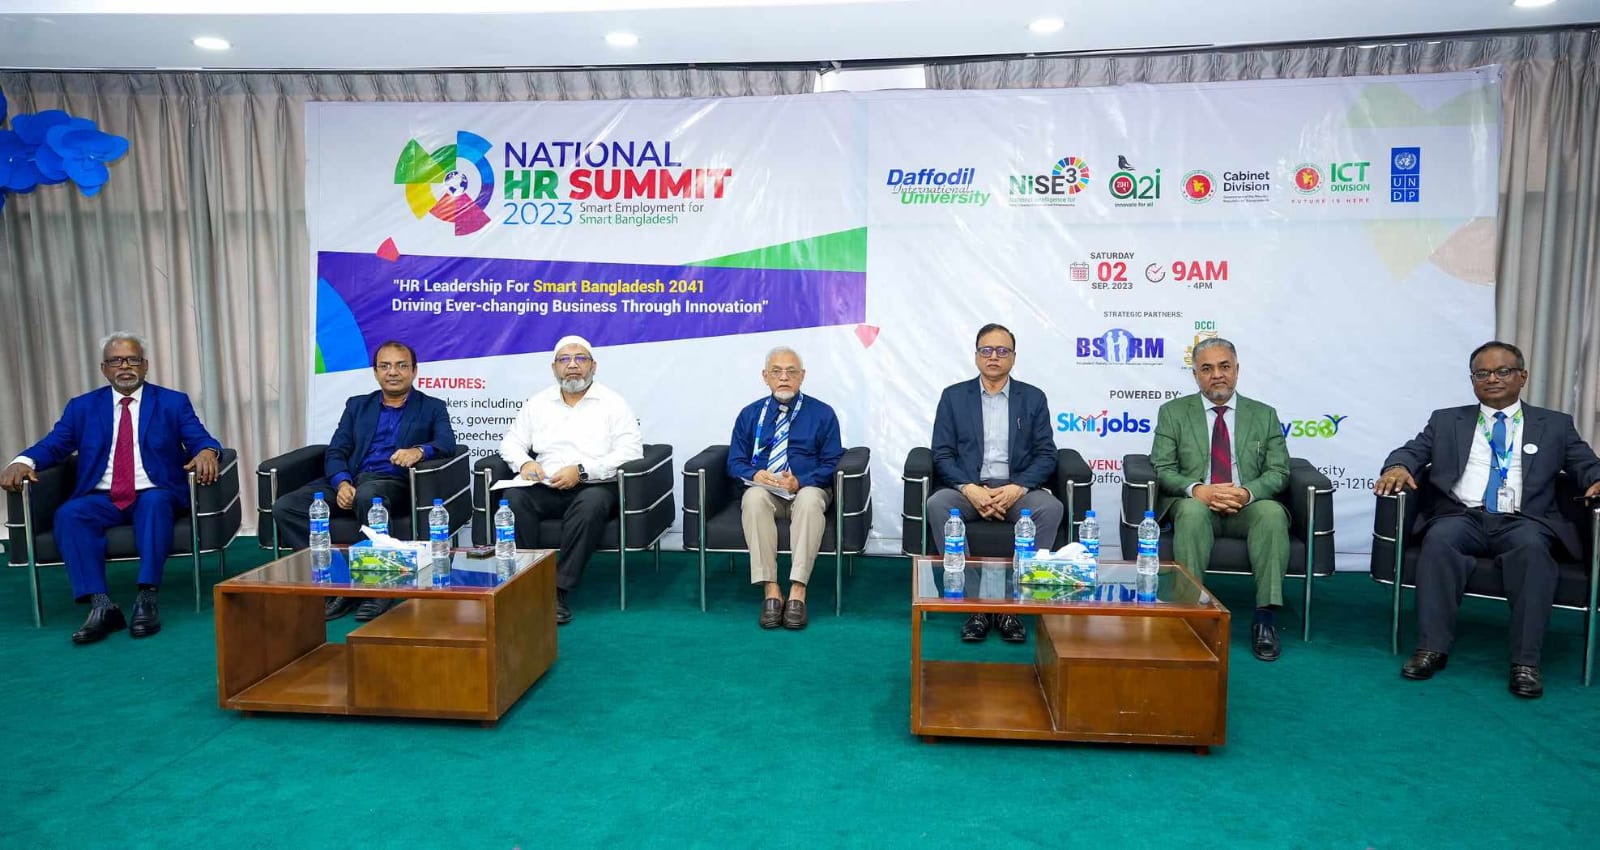 National HR Summit:2023
------------------ Transforming Digital Bangladesh into a Smart Nation